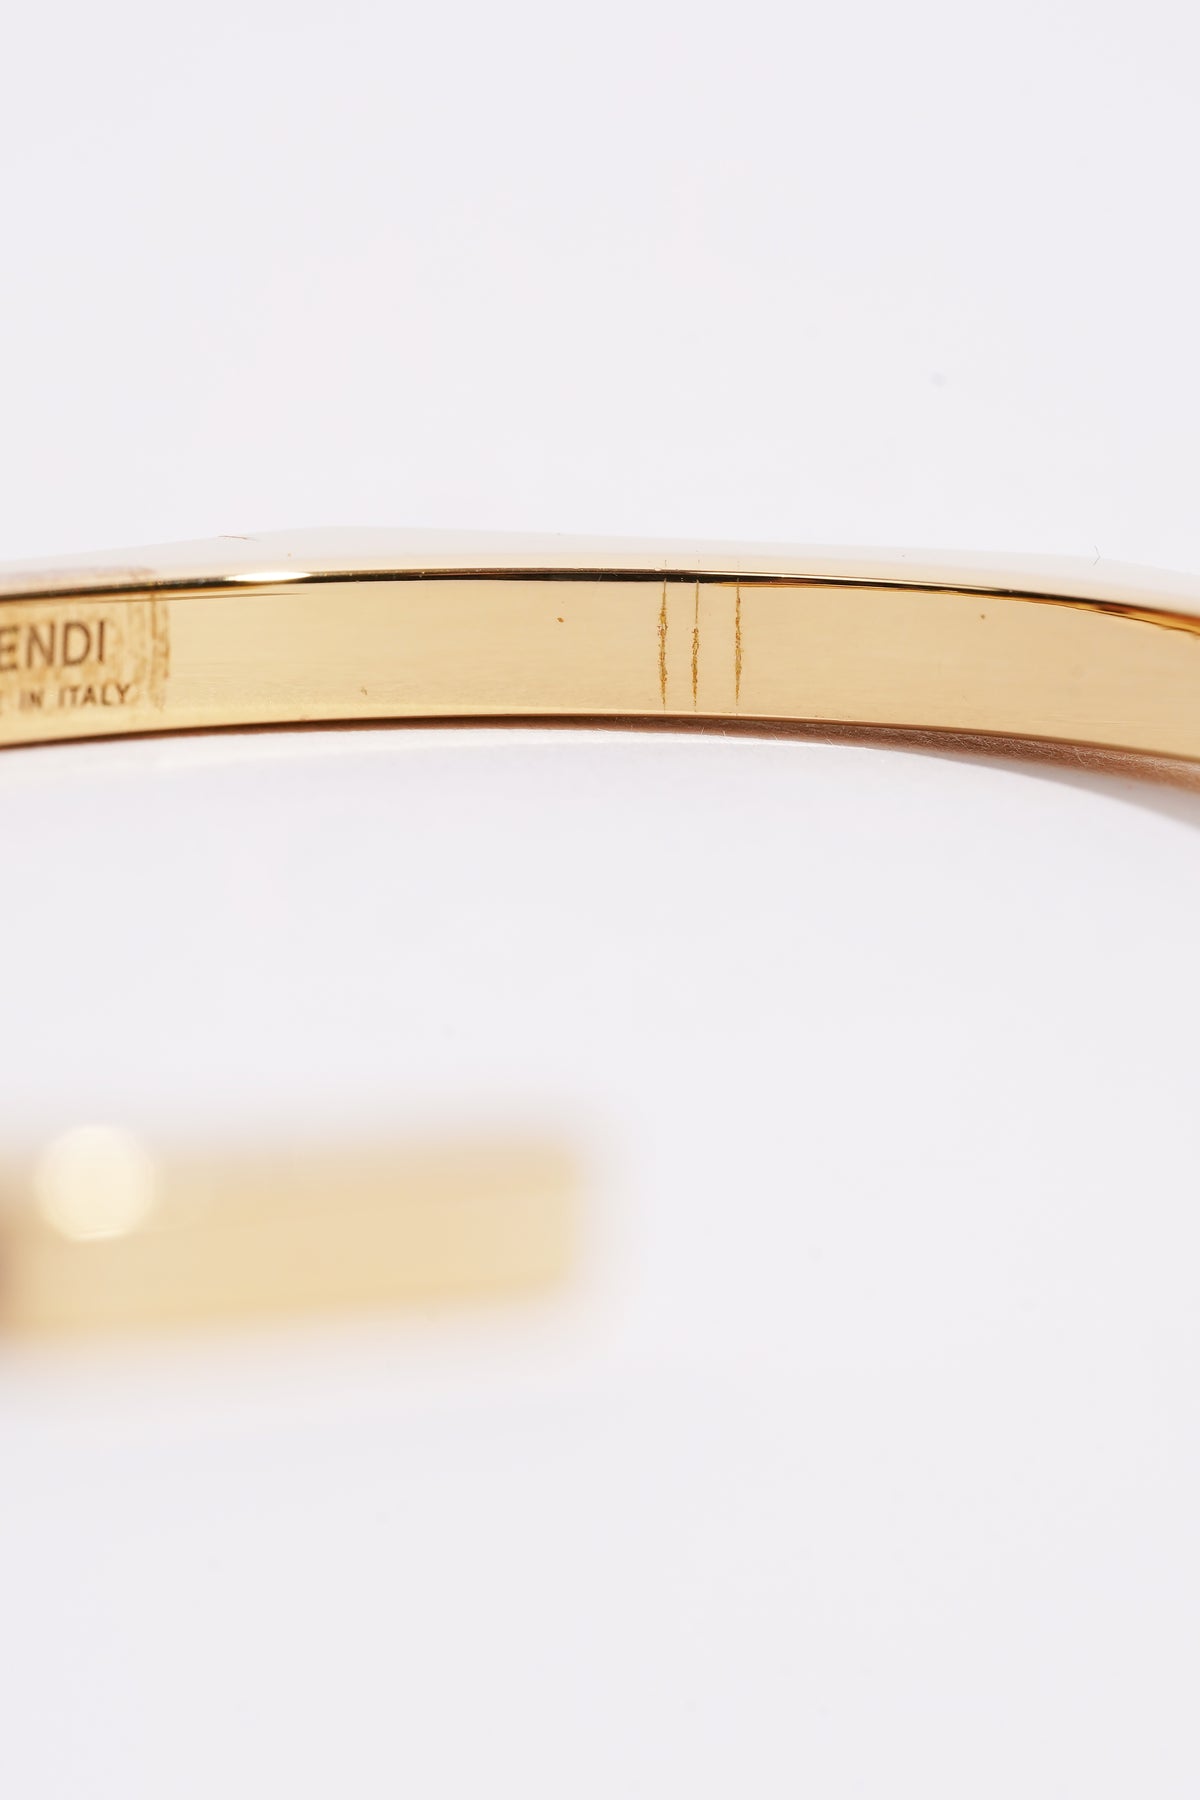 FENDI Metal Crystal F is Fendi Bracelet Rose Gold 1238884 | FASHIONPHILE